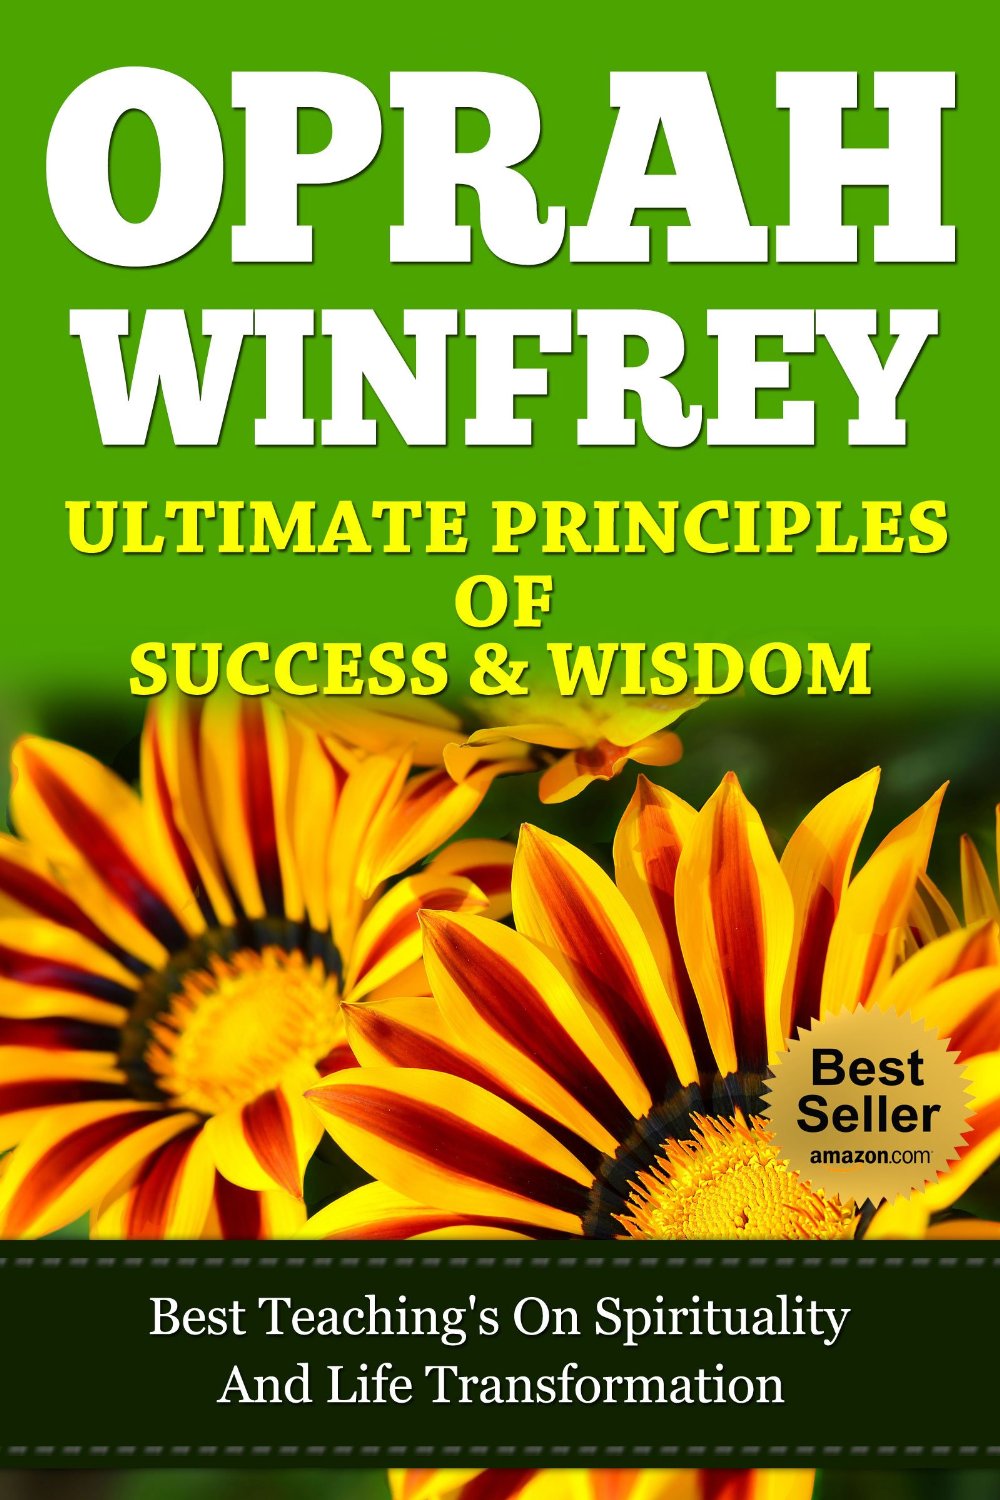 Oprah Winfrey Ultimate Principles Of Success & Wisdom by Kathryn Sandberg